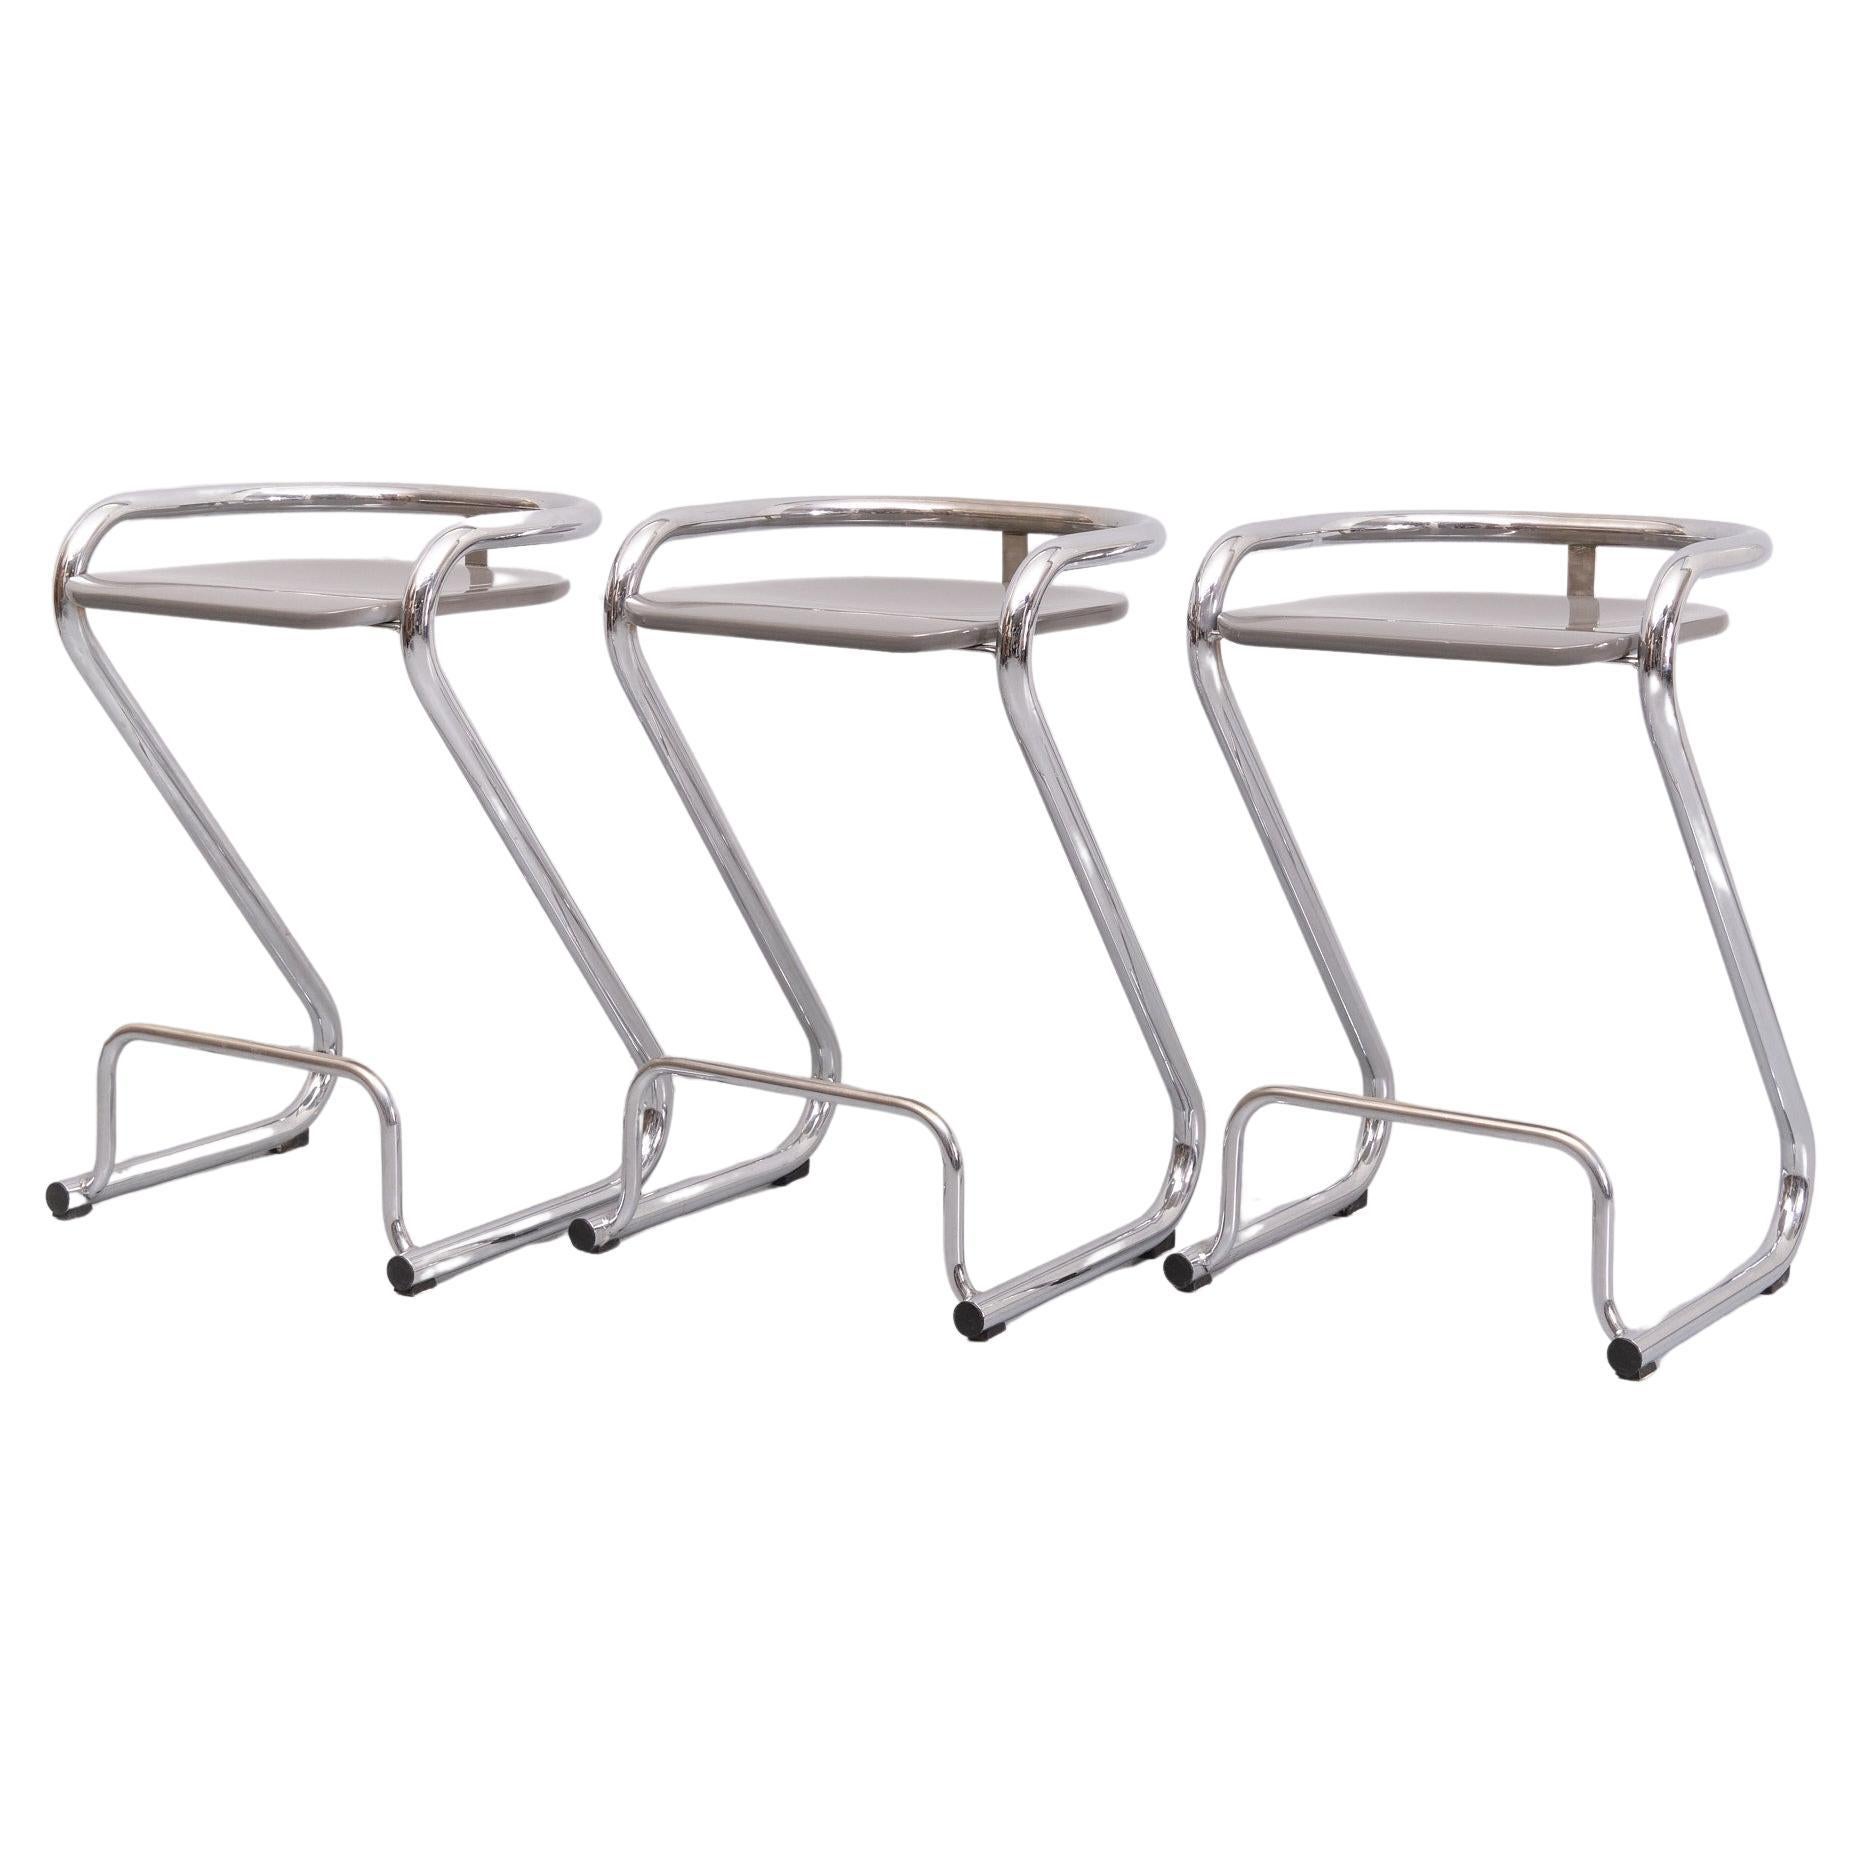 Set of 3 Bar stools S70-3 by Borge Lindau & Bo Lindekrantz for Lammhults  1960  For Sale